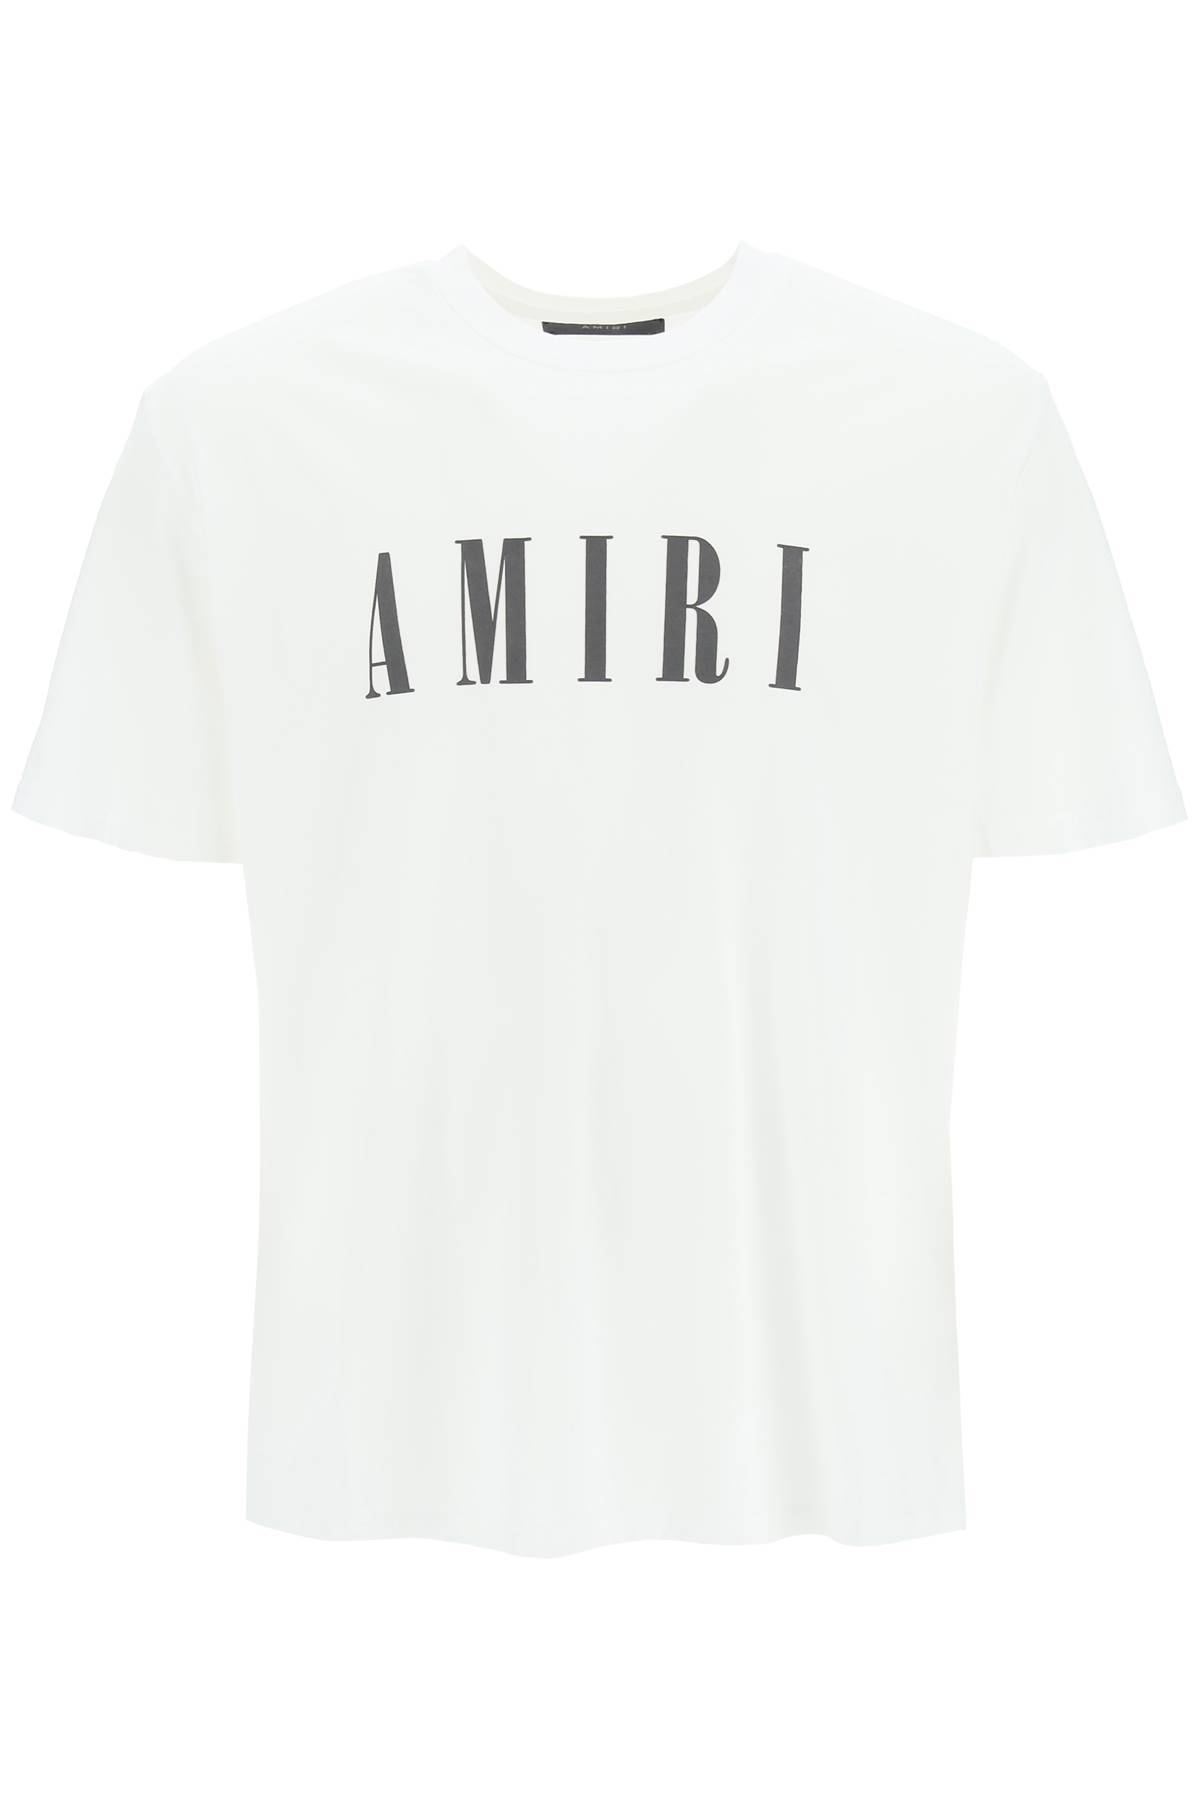 Amiri AMIRI core logo t-shirt